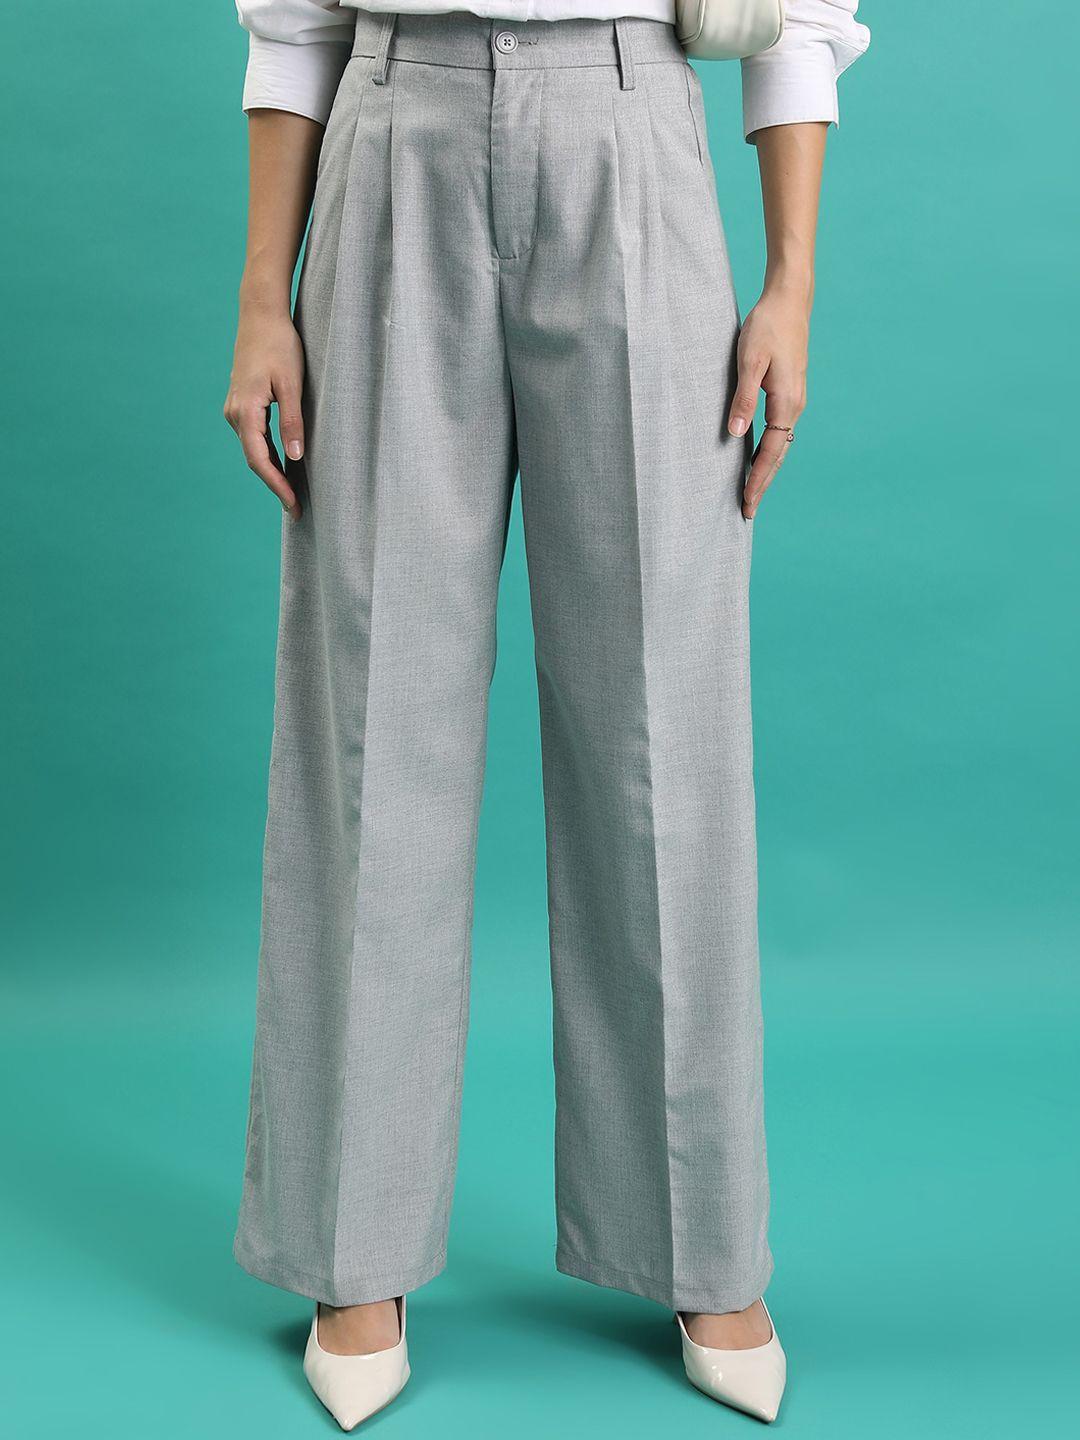 tokyo talkies women grey high-rise parallel trouser